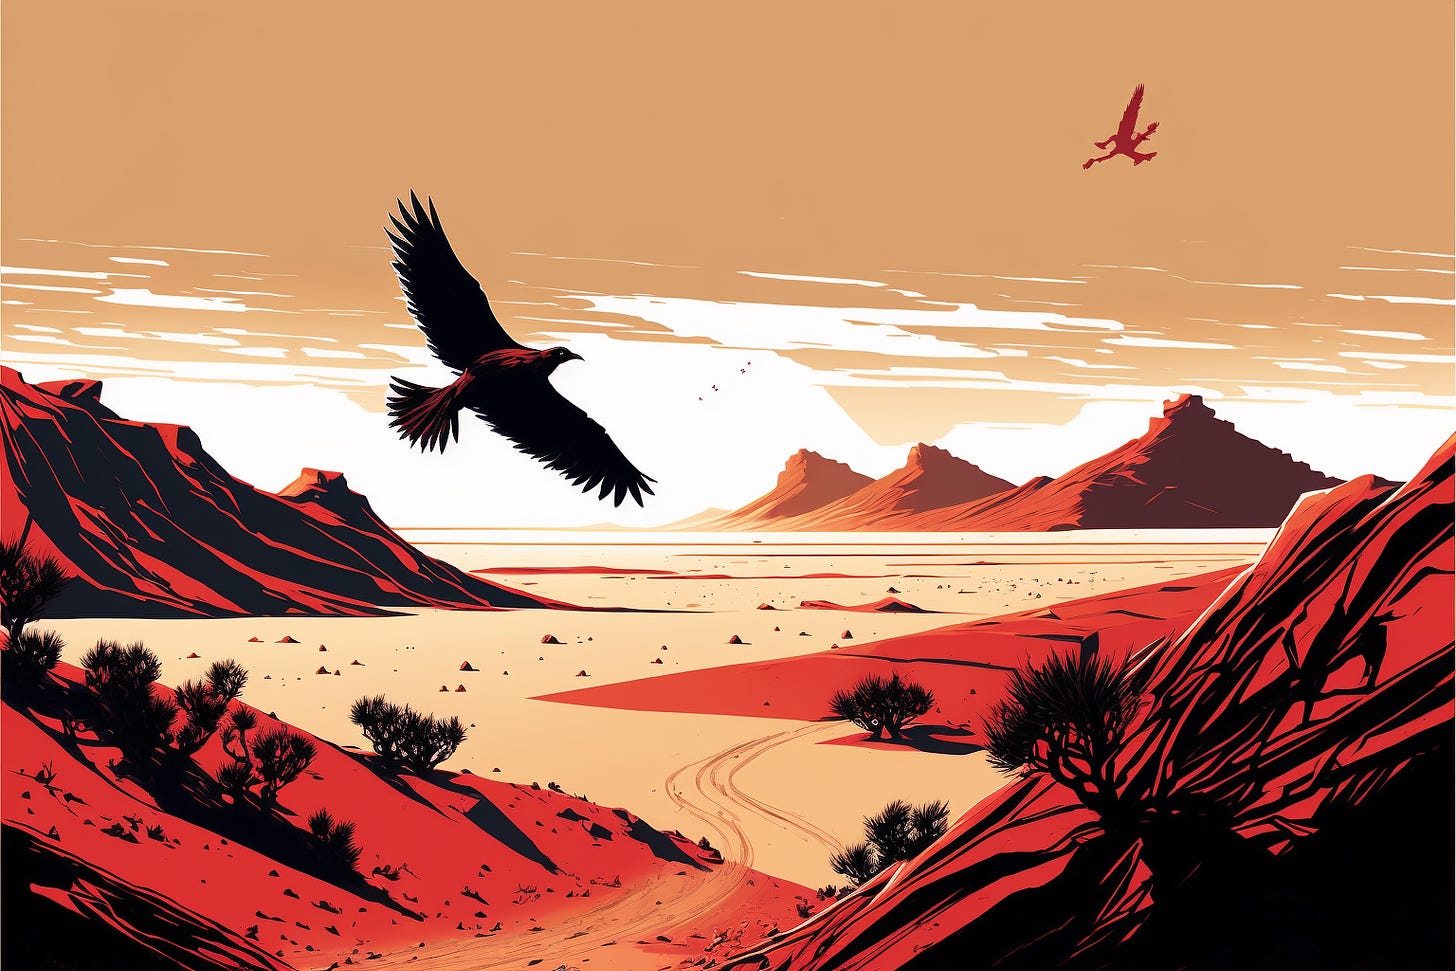 a red bird flying through the desert sky, graphic novel